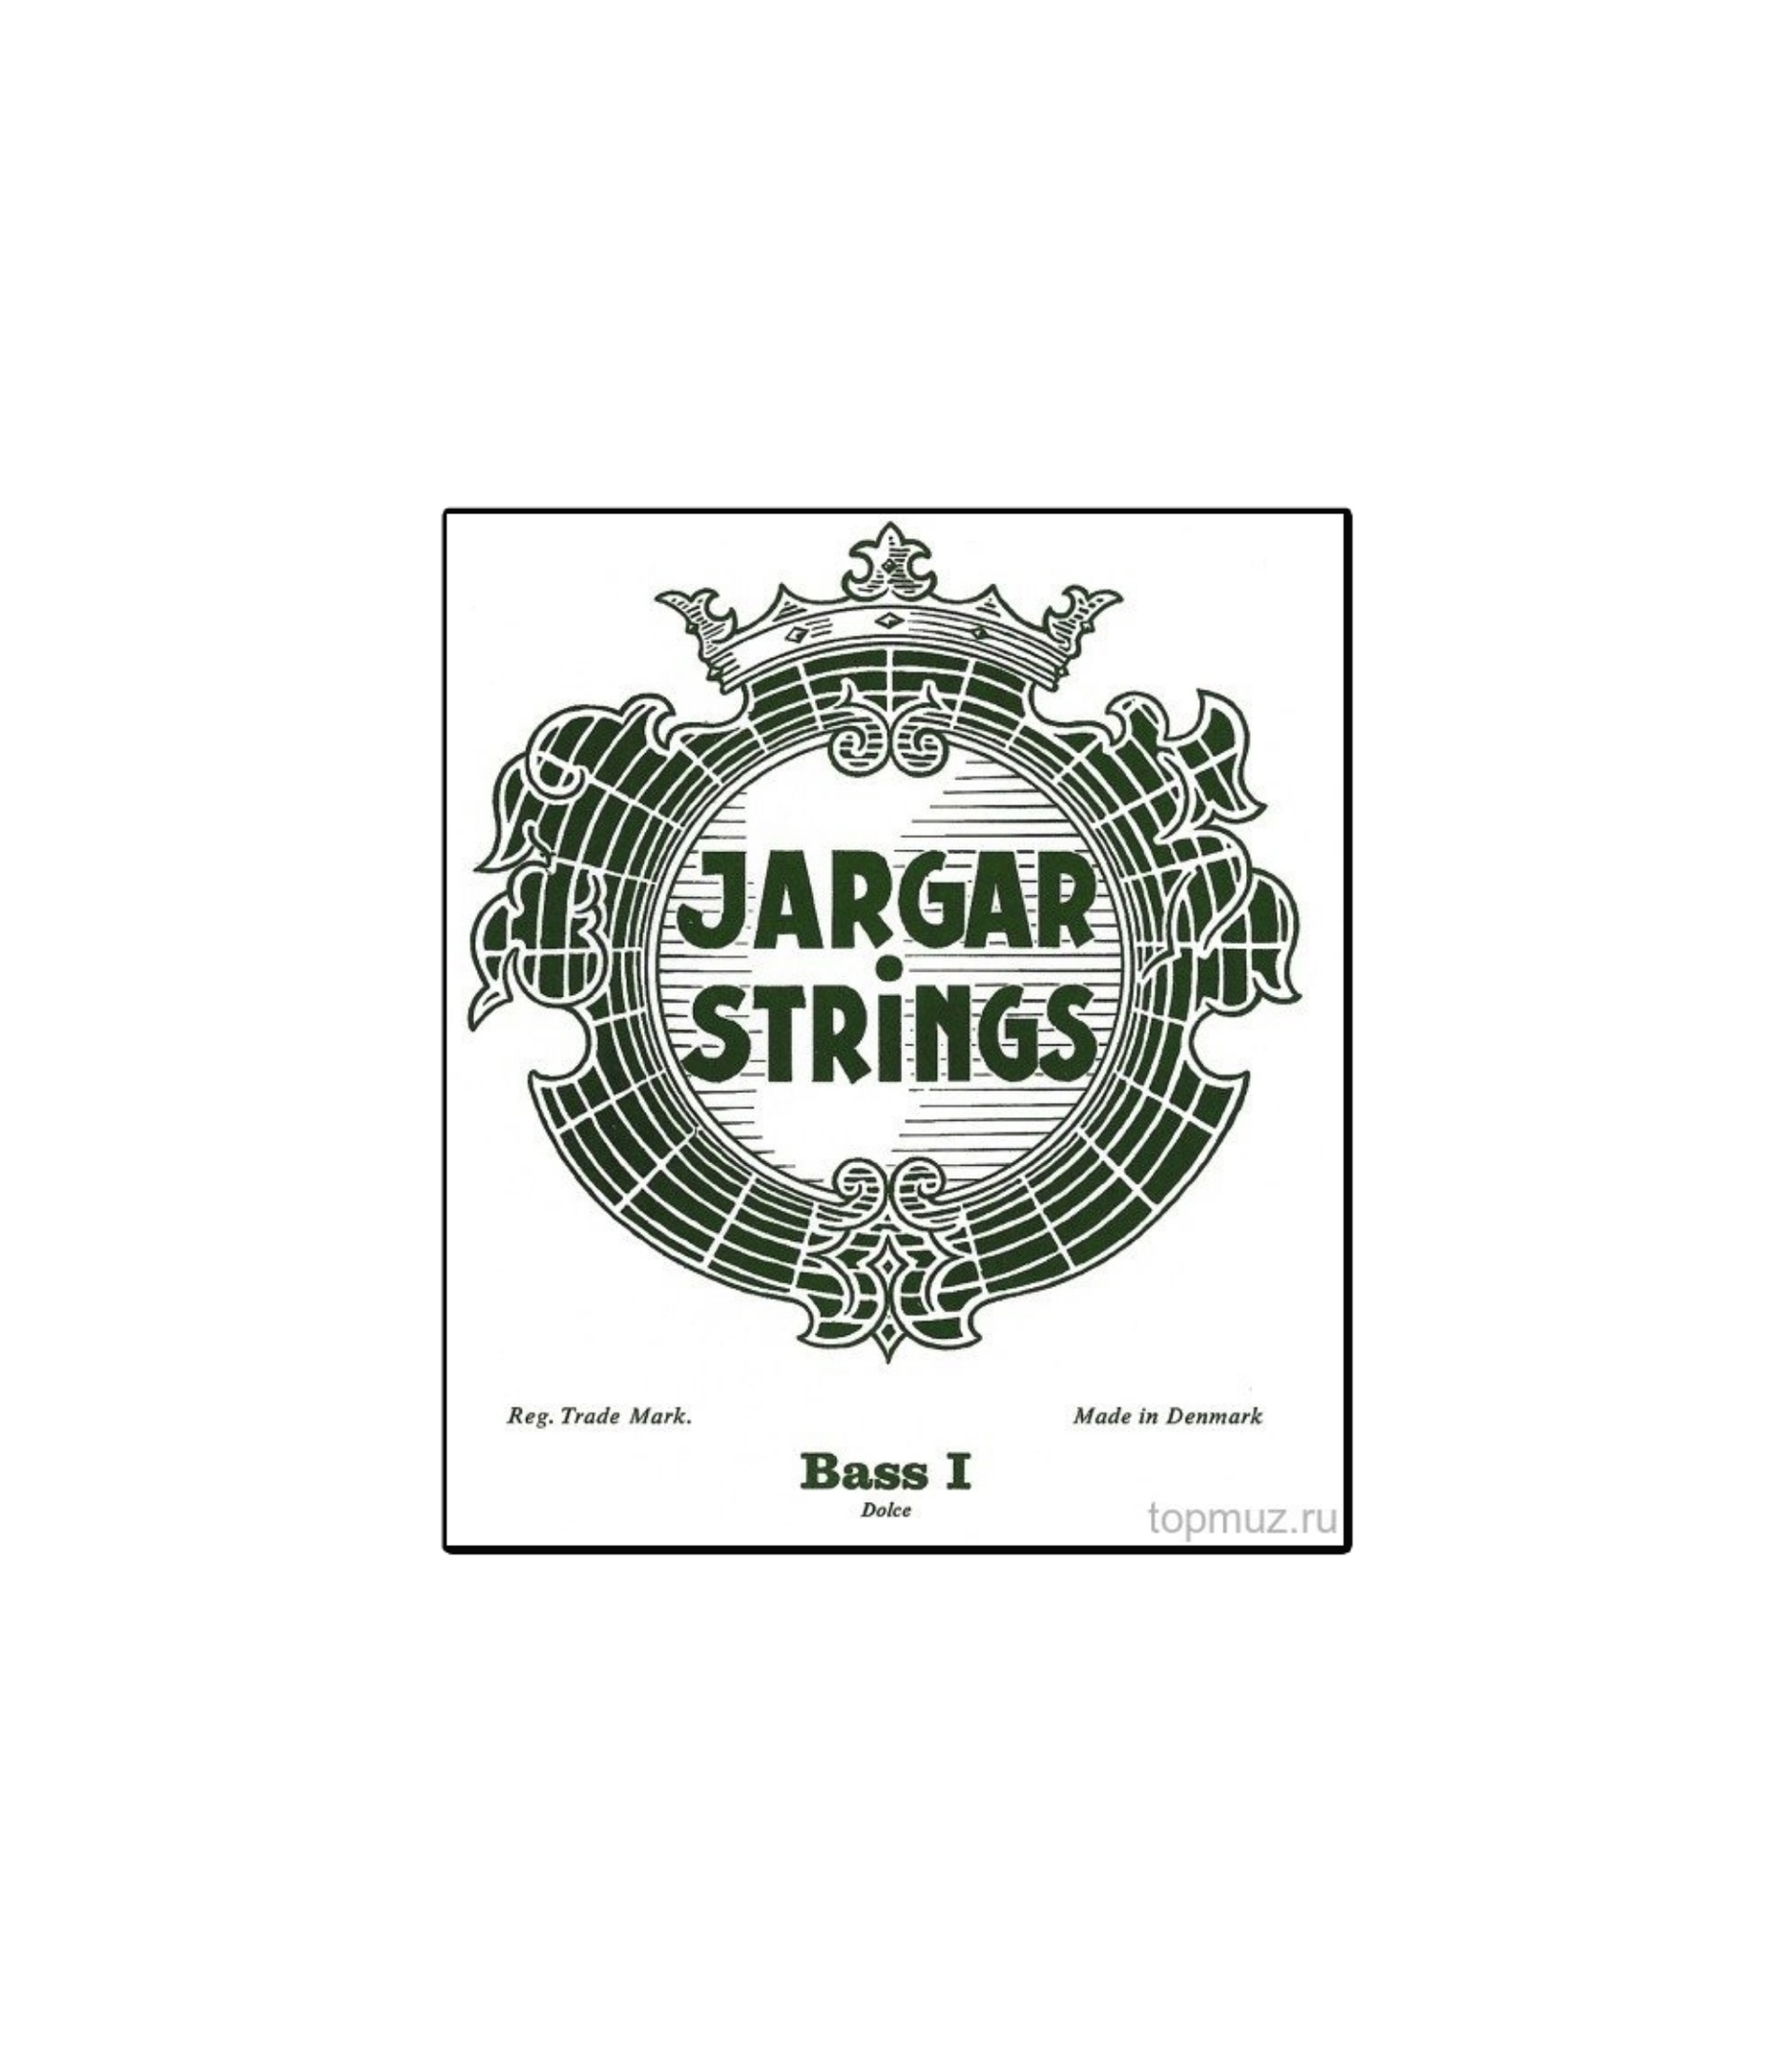 Jargar Medium 4 String струны для контрабаса, Дания